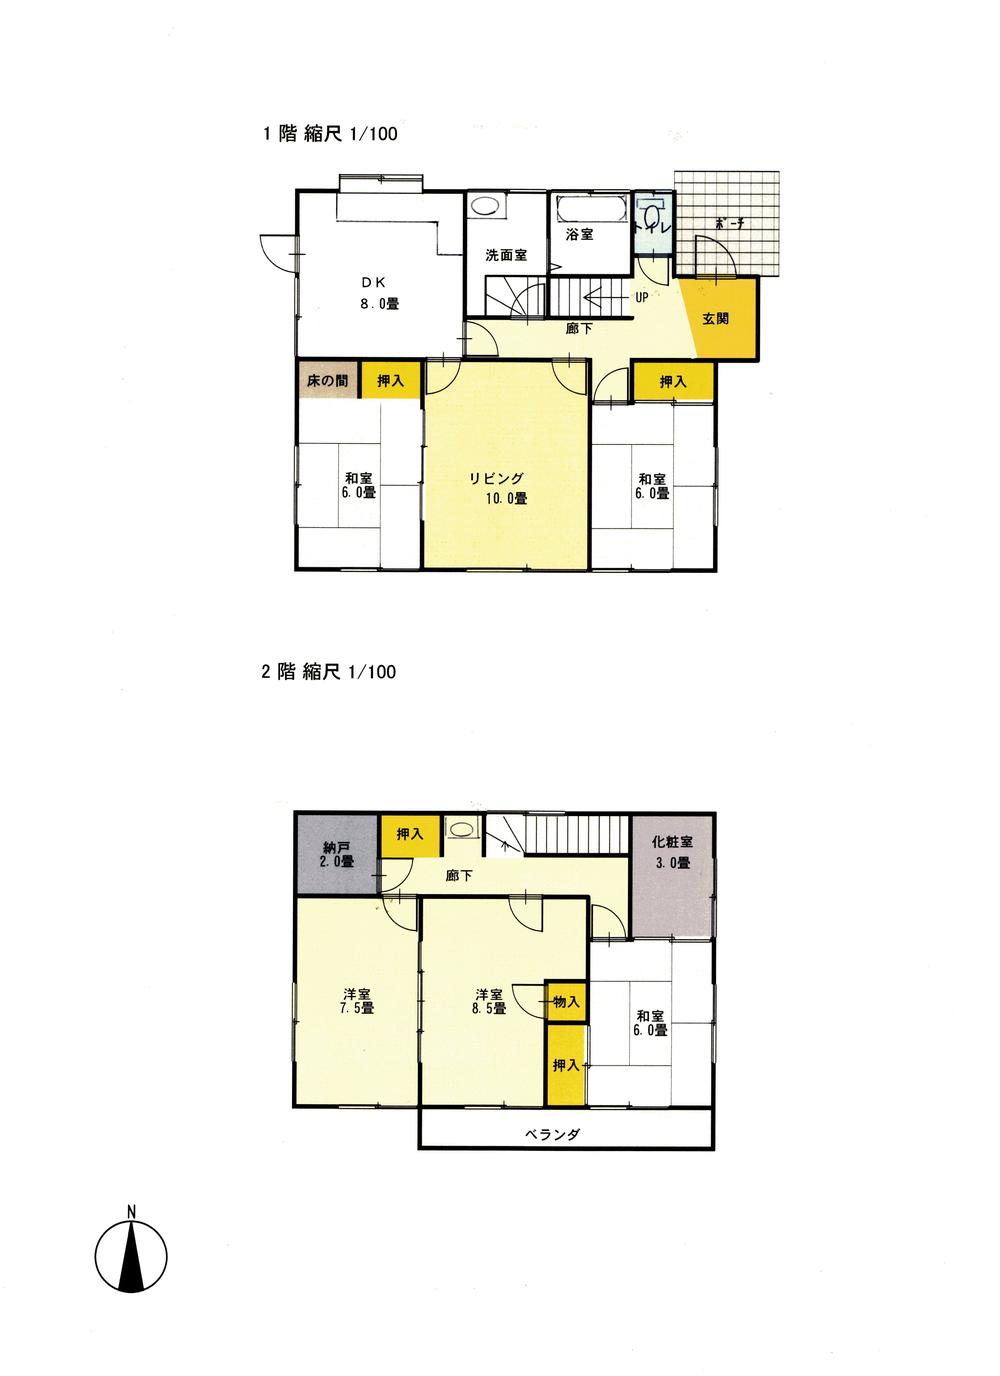 Floor plan. 12 million yen, 6DK + S (storeroom), Land area 281 sq m , Building area 115.09 sq m extension (about 16.5 sq m) Yes